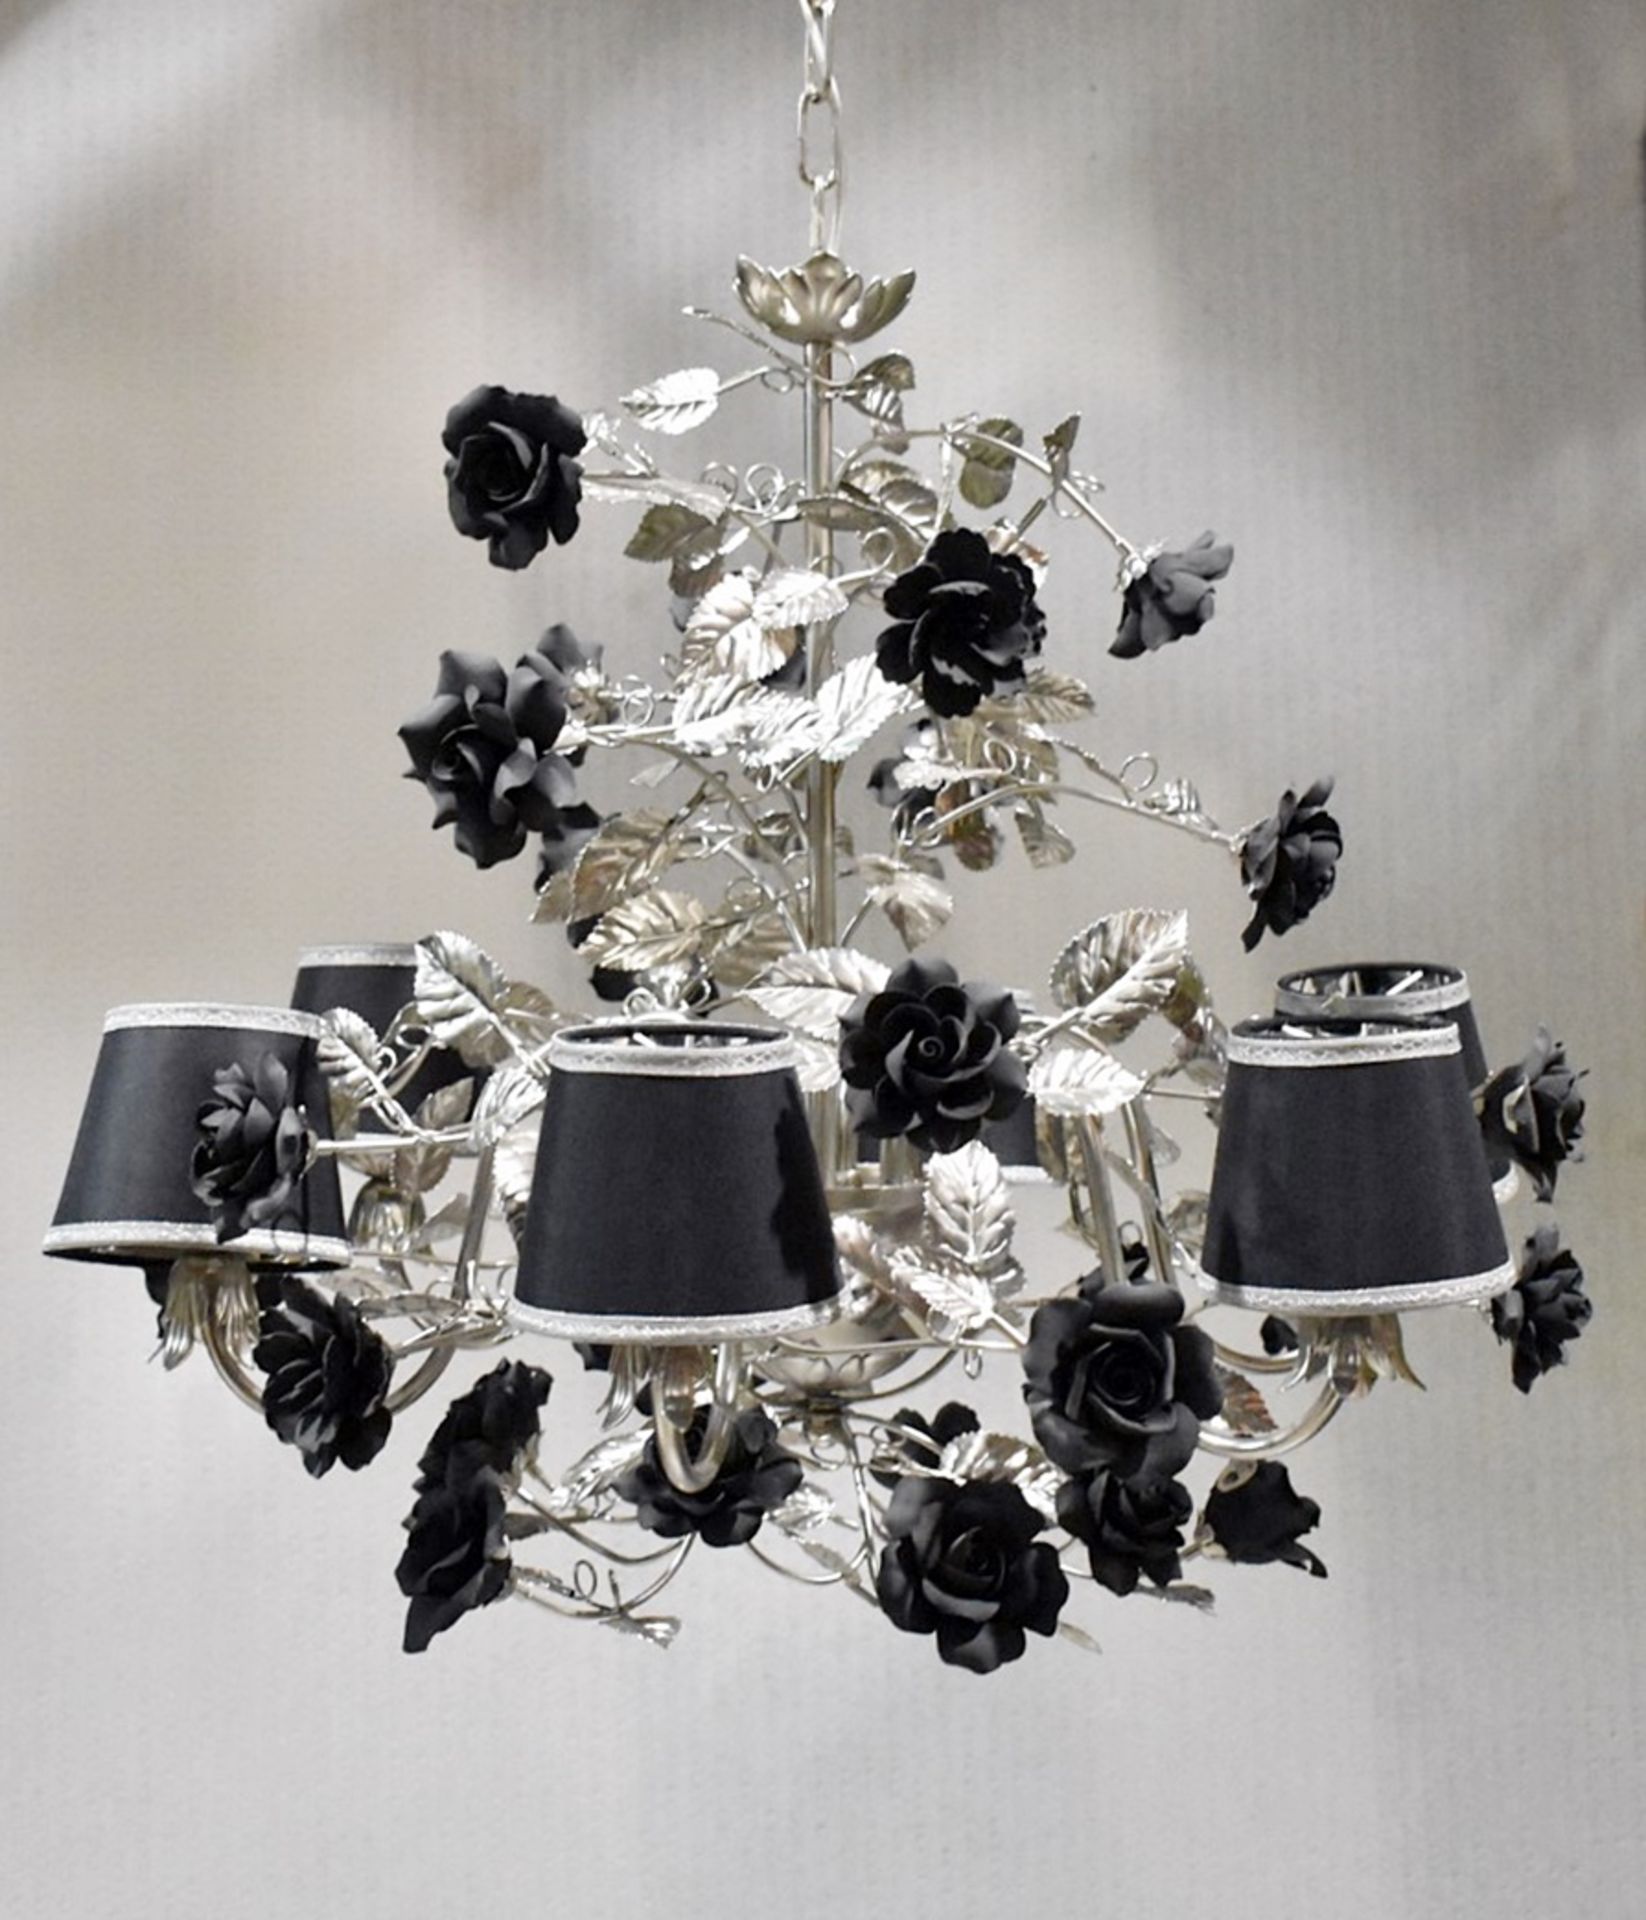 1 x VILLARI Opulent Platinum Plated 6-Arm Luxury Chandelier With Porcelain Decoration - RRP £12,000 - Image 2 of 17